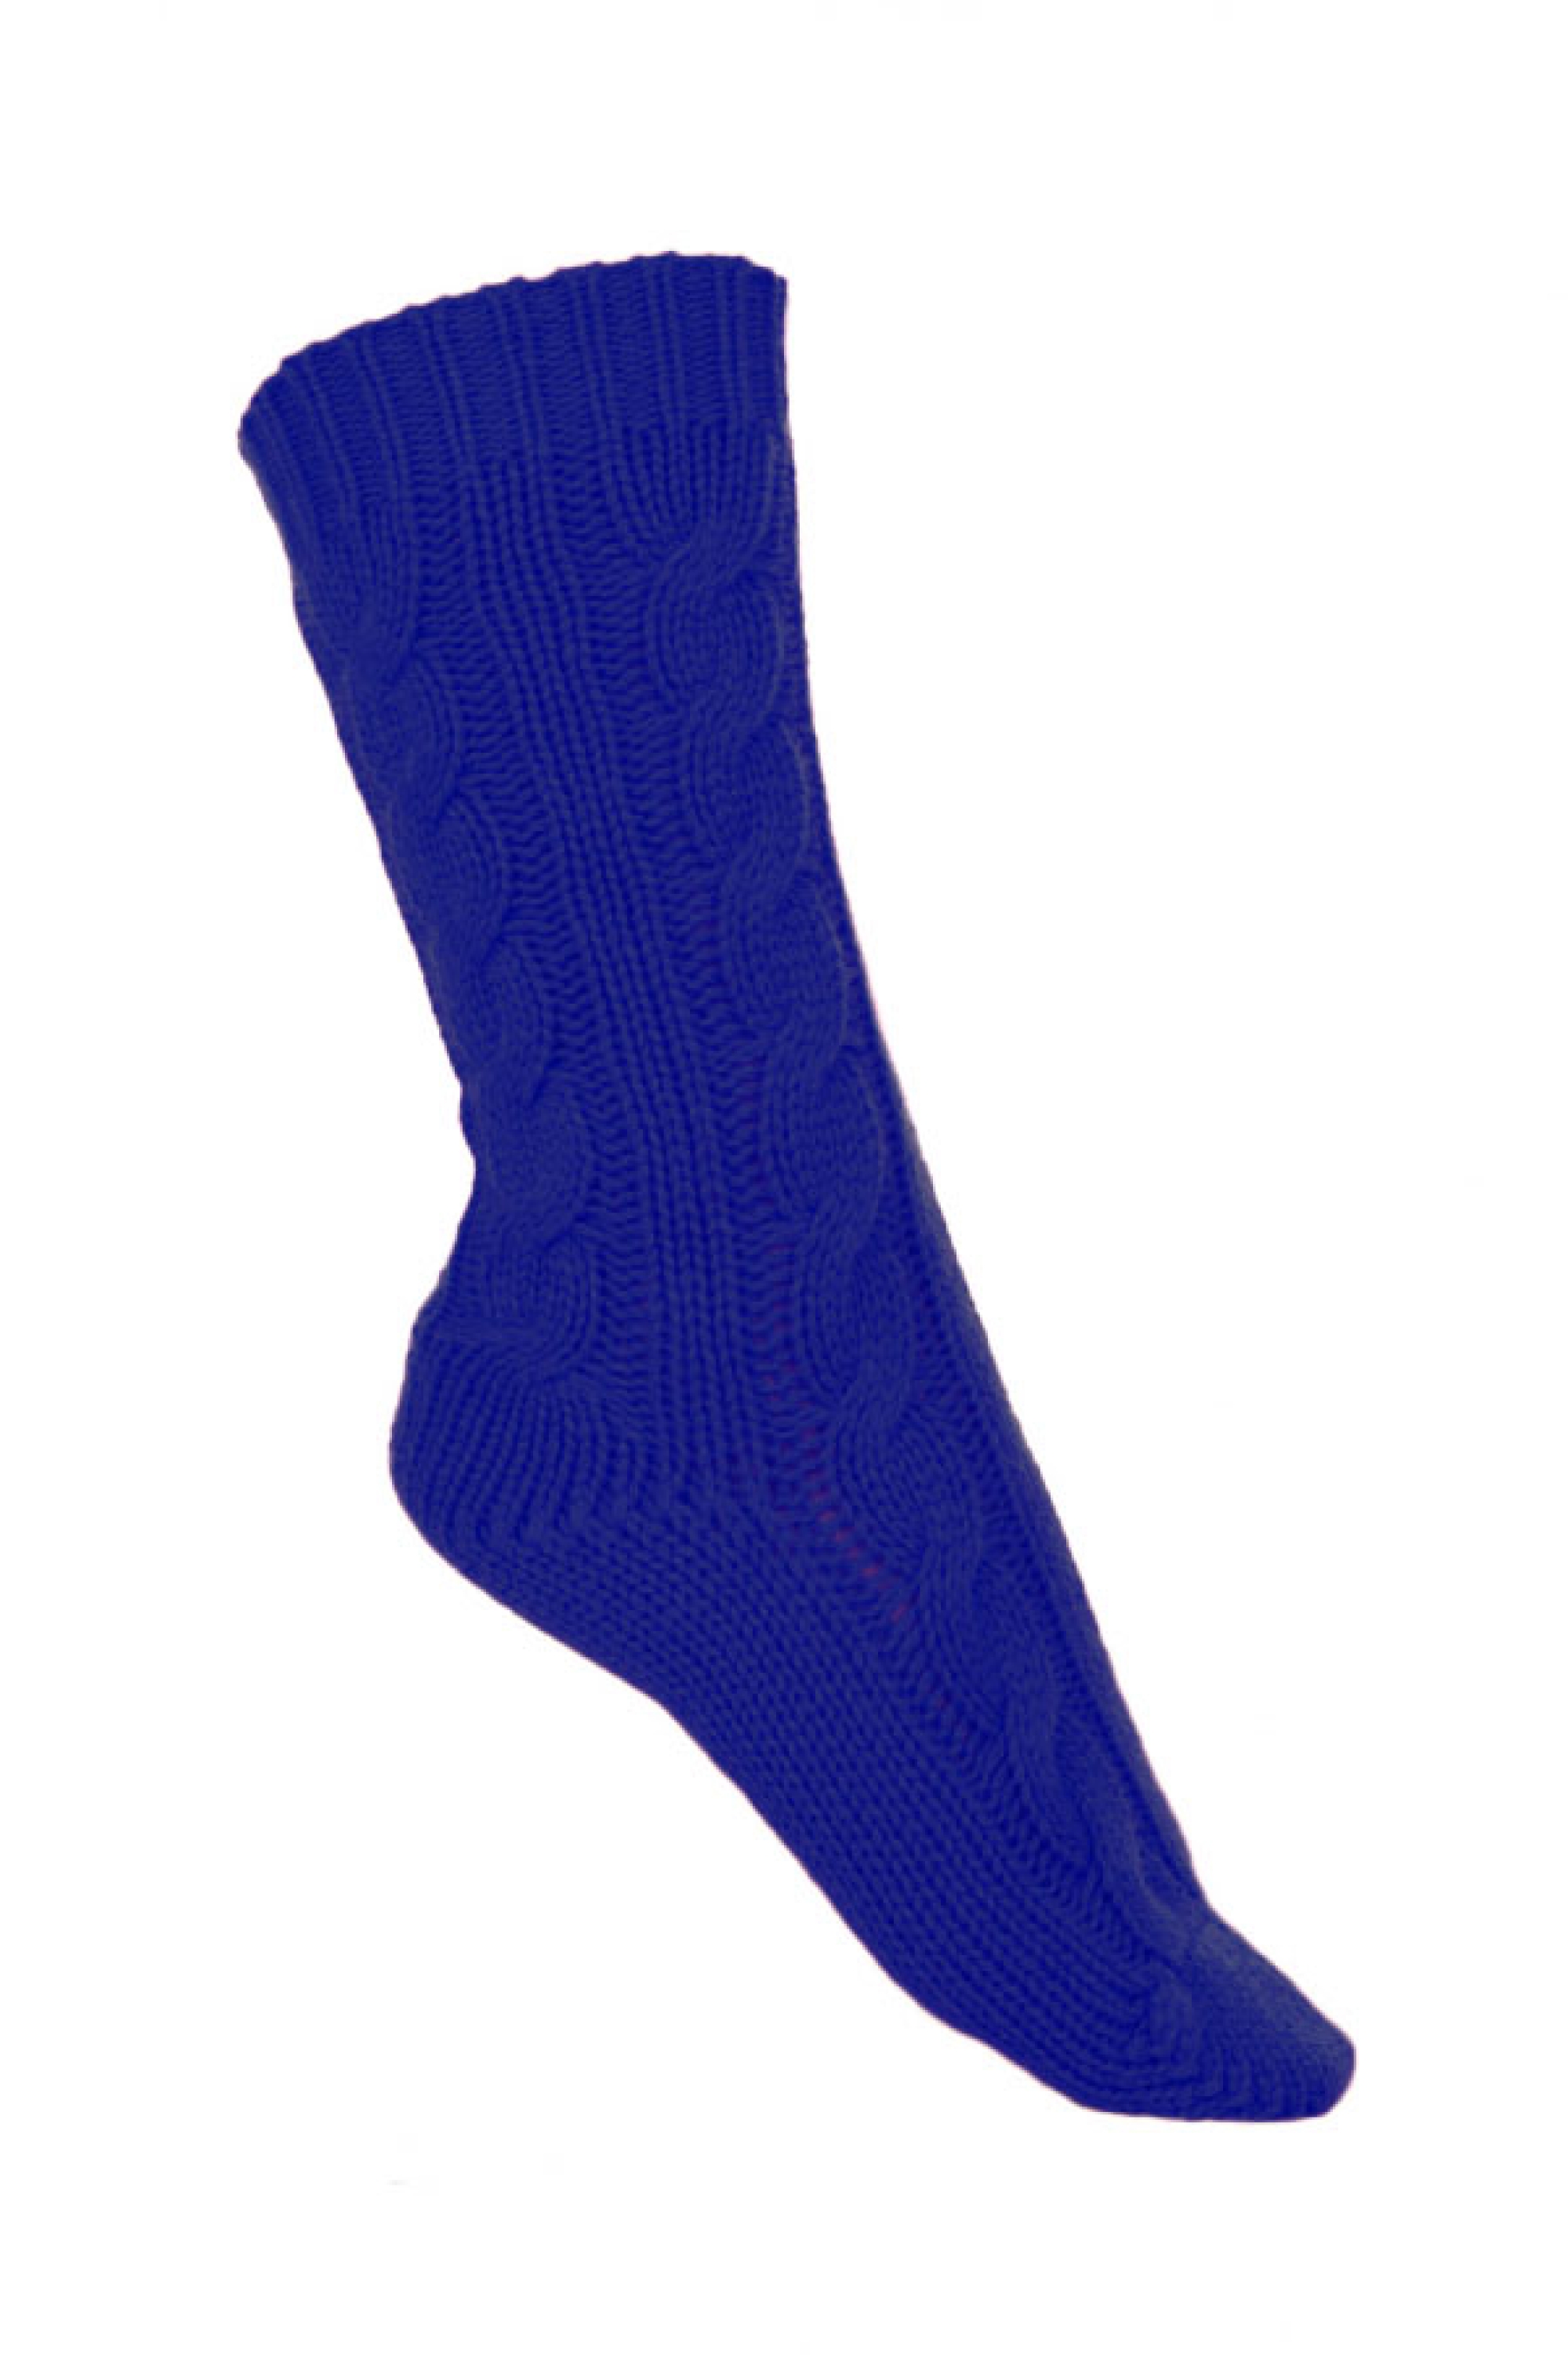 Cashmere accessories socks pedibus bleu regata 37 41